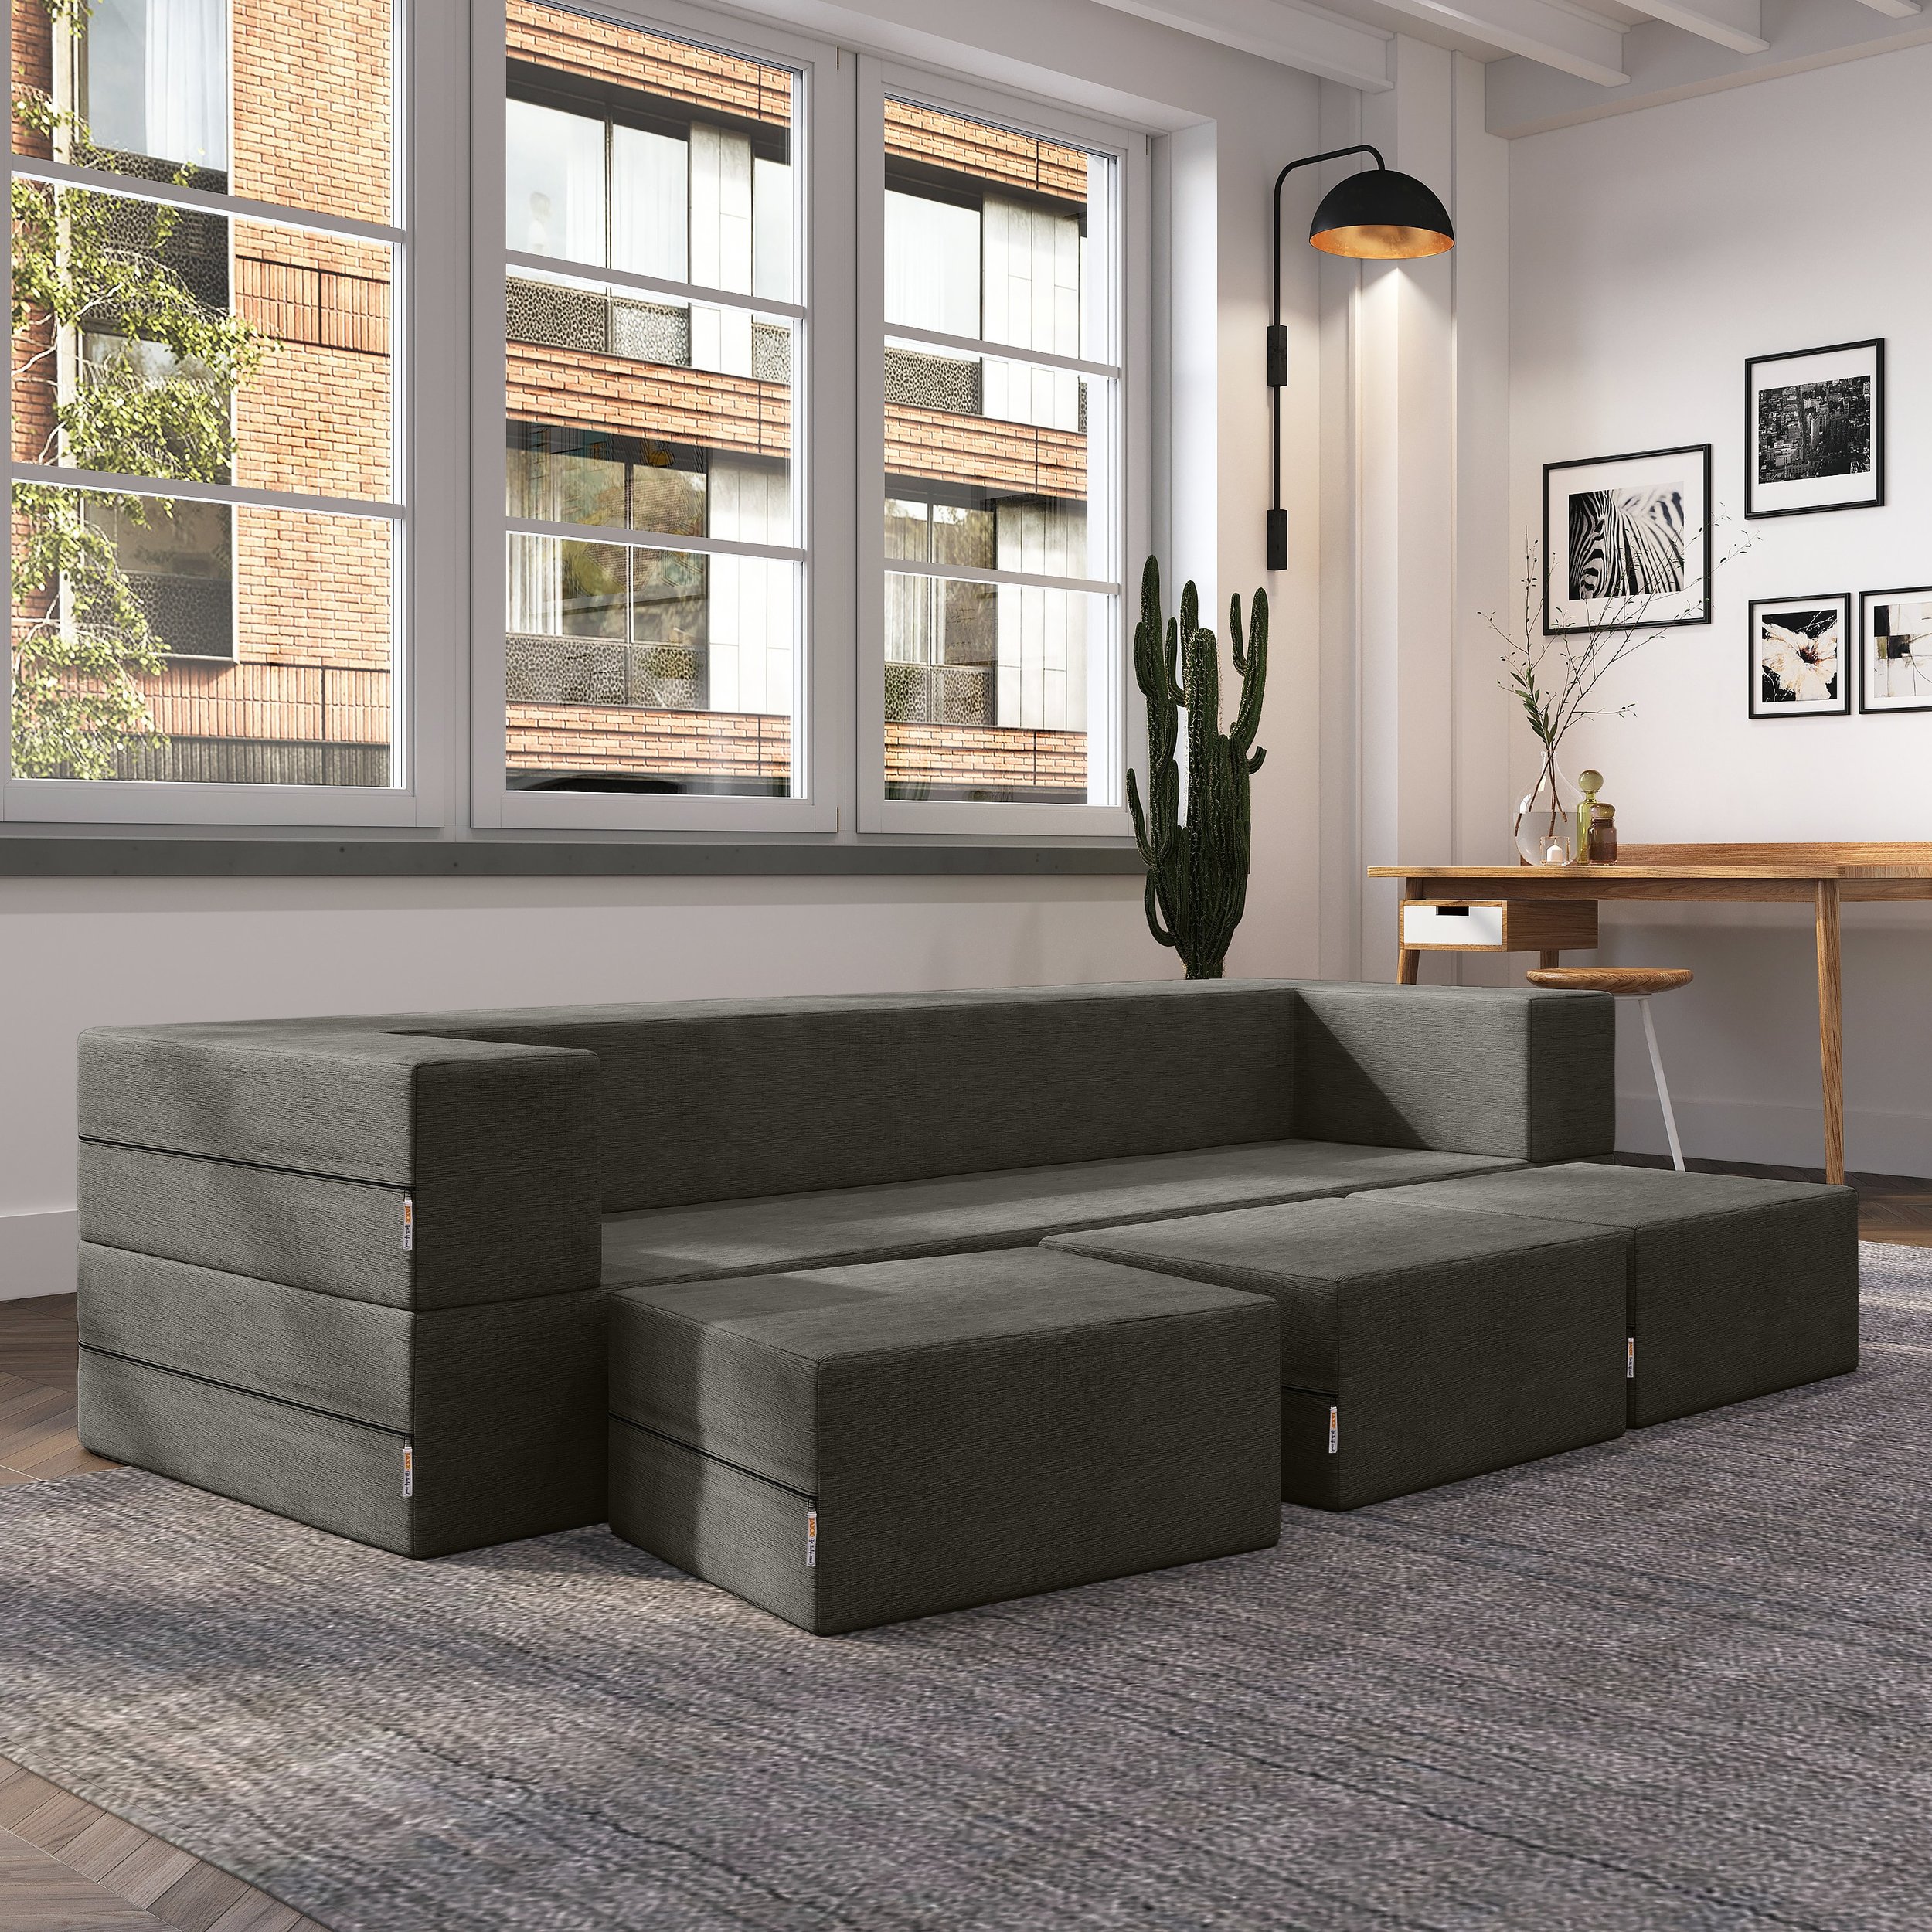 zipline-sofa-charcoal-lifestyle-modernloft-3000x3000.jpg